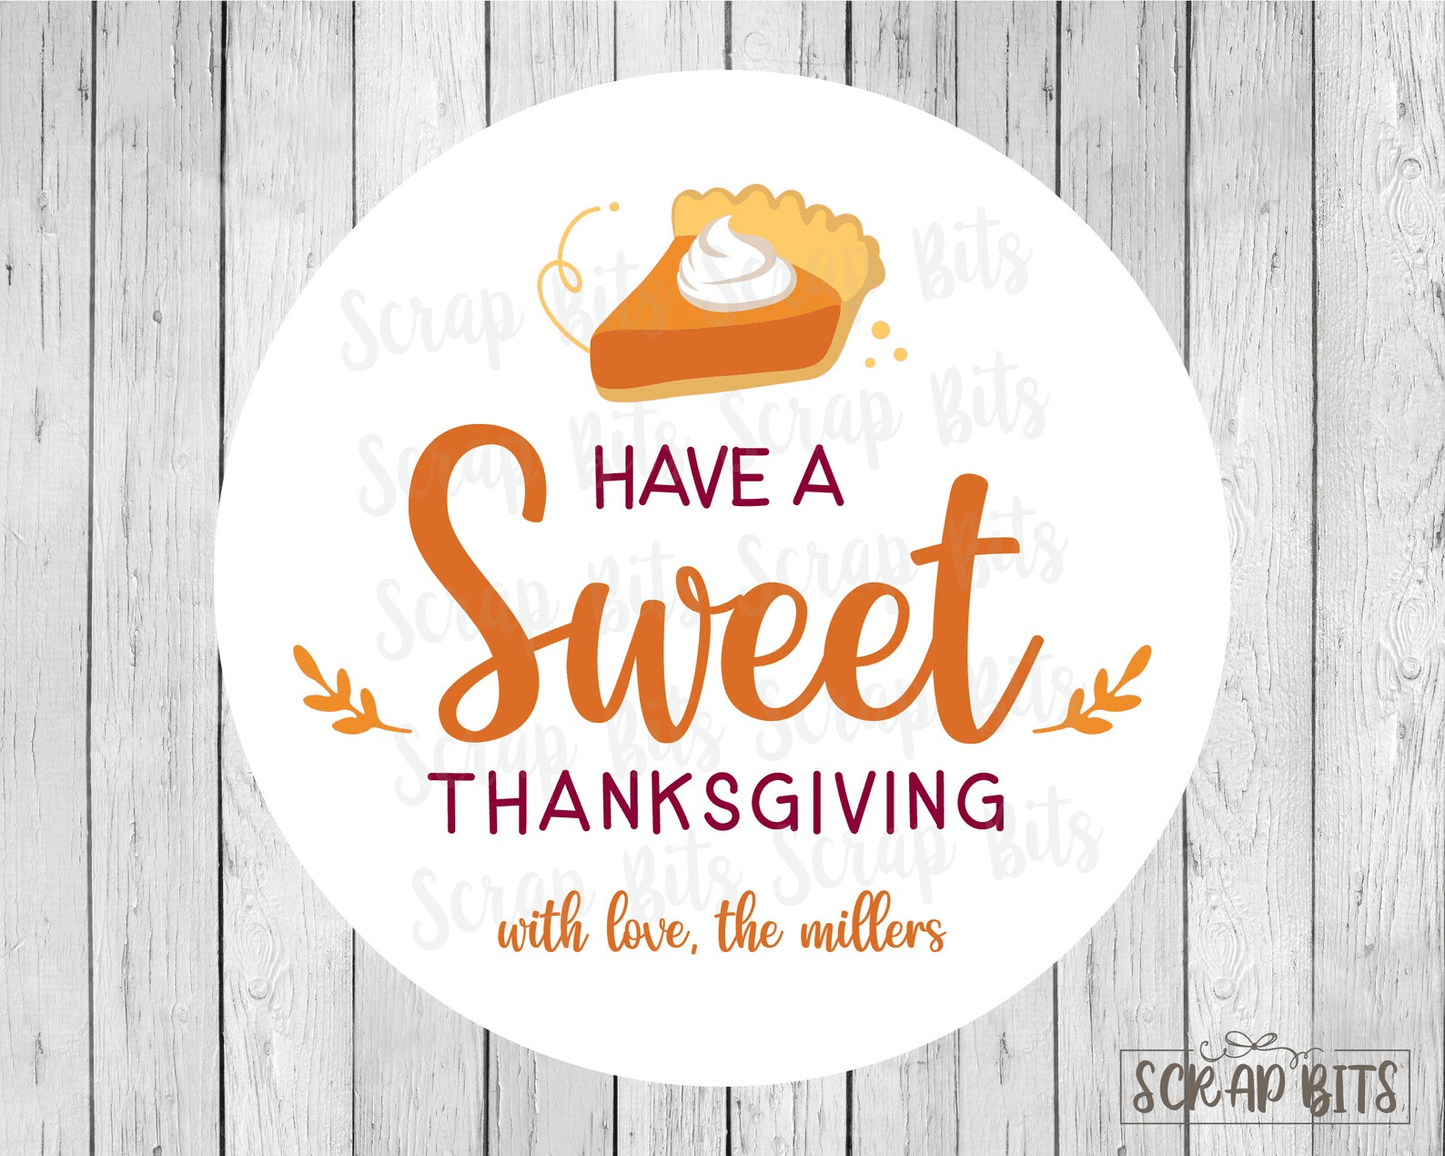 Have A Sweet Thanksgiving Stickers, Pumpkin Pie Labels . Thanksgiving Stickers or Tags - Scrap Bits